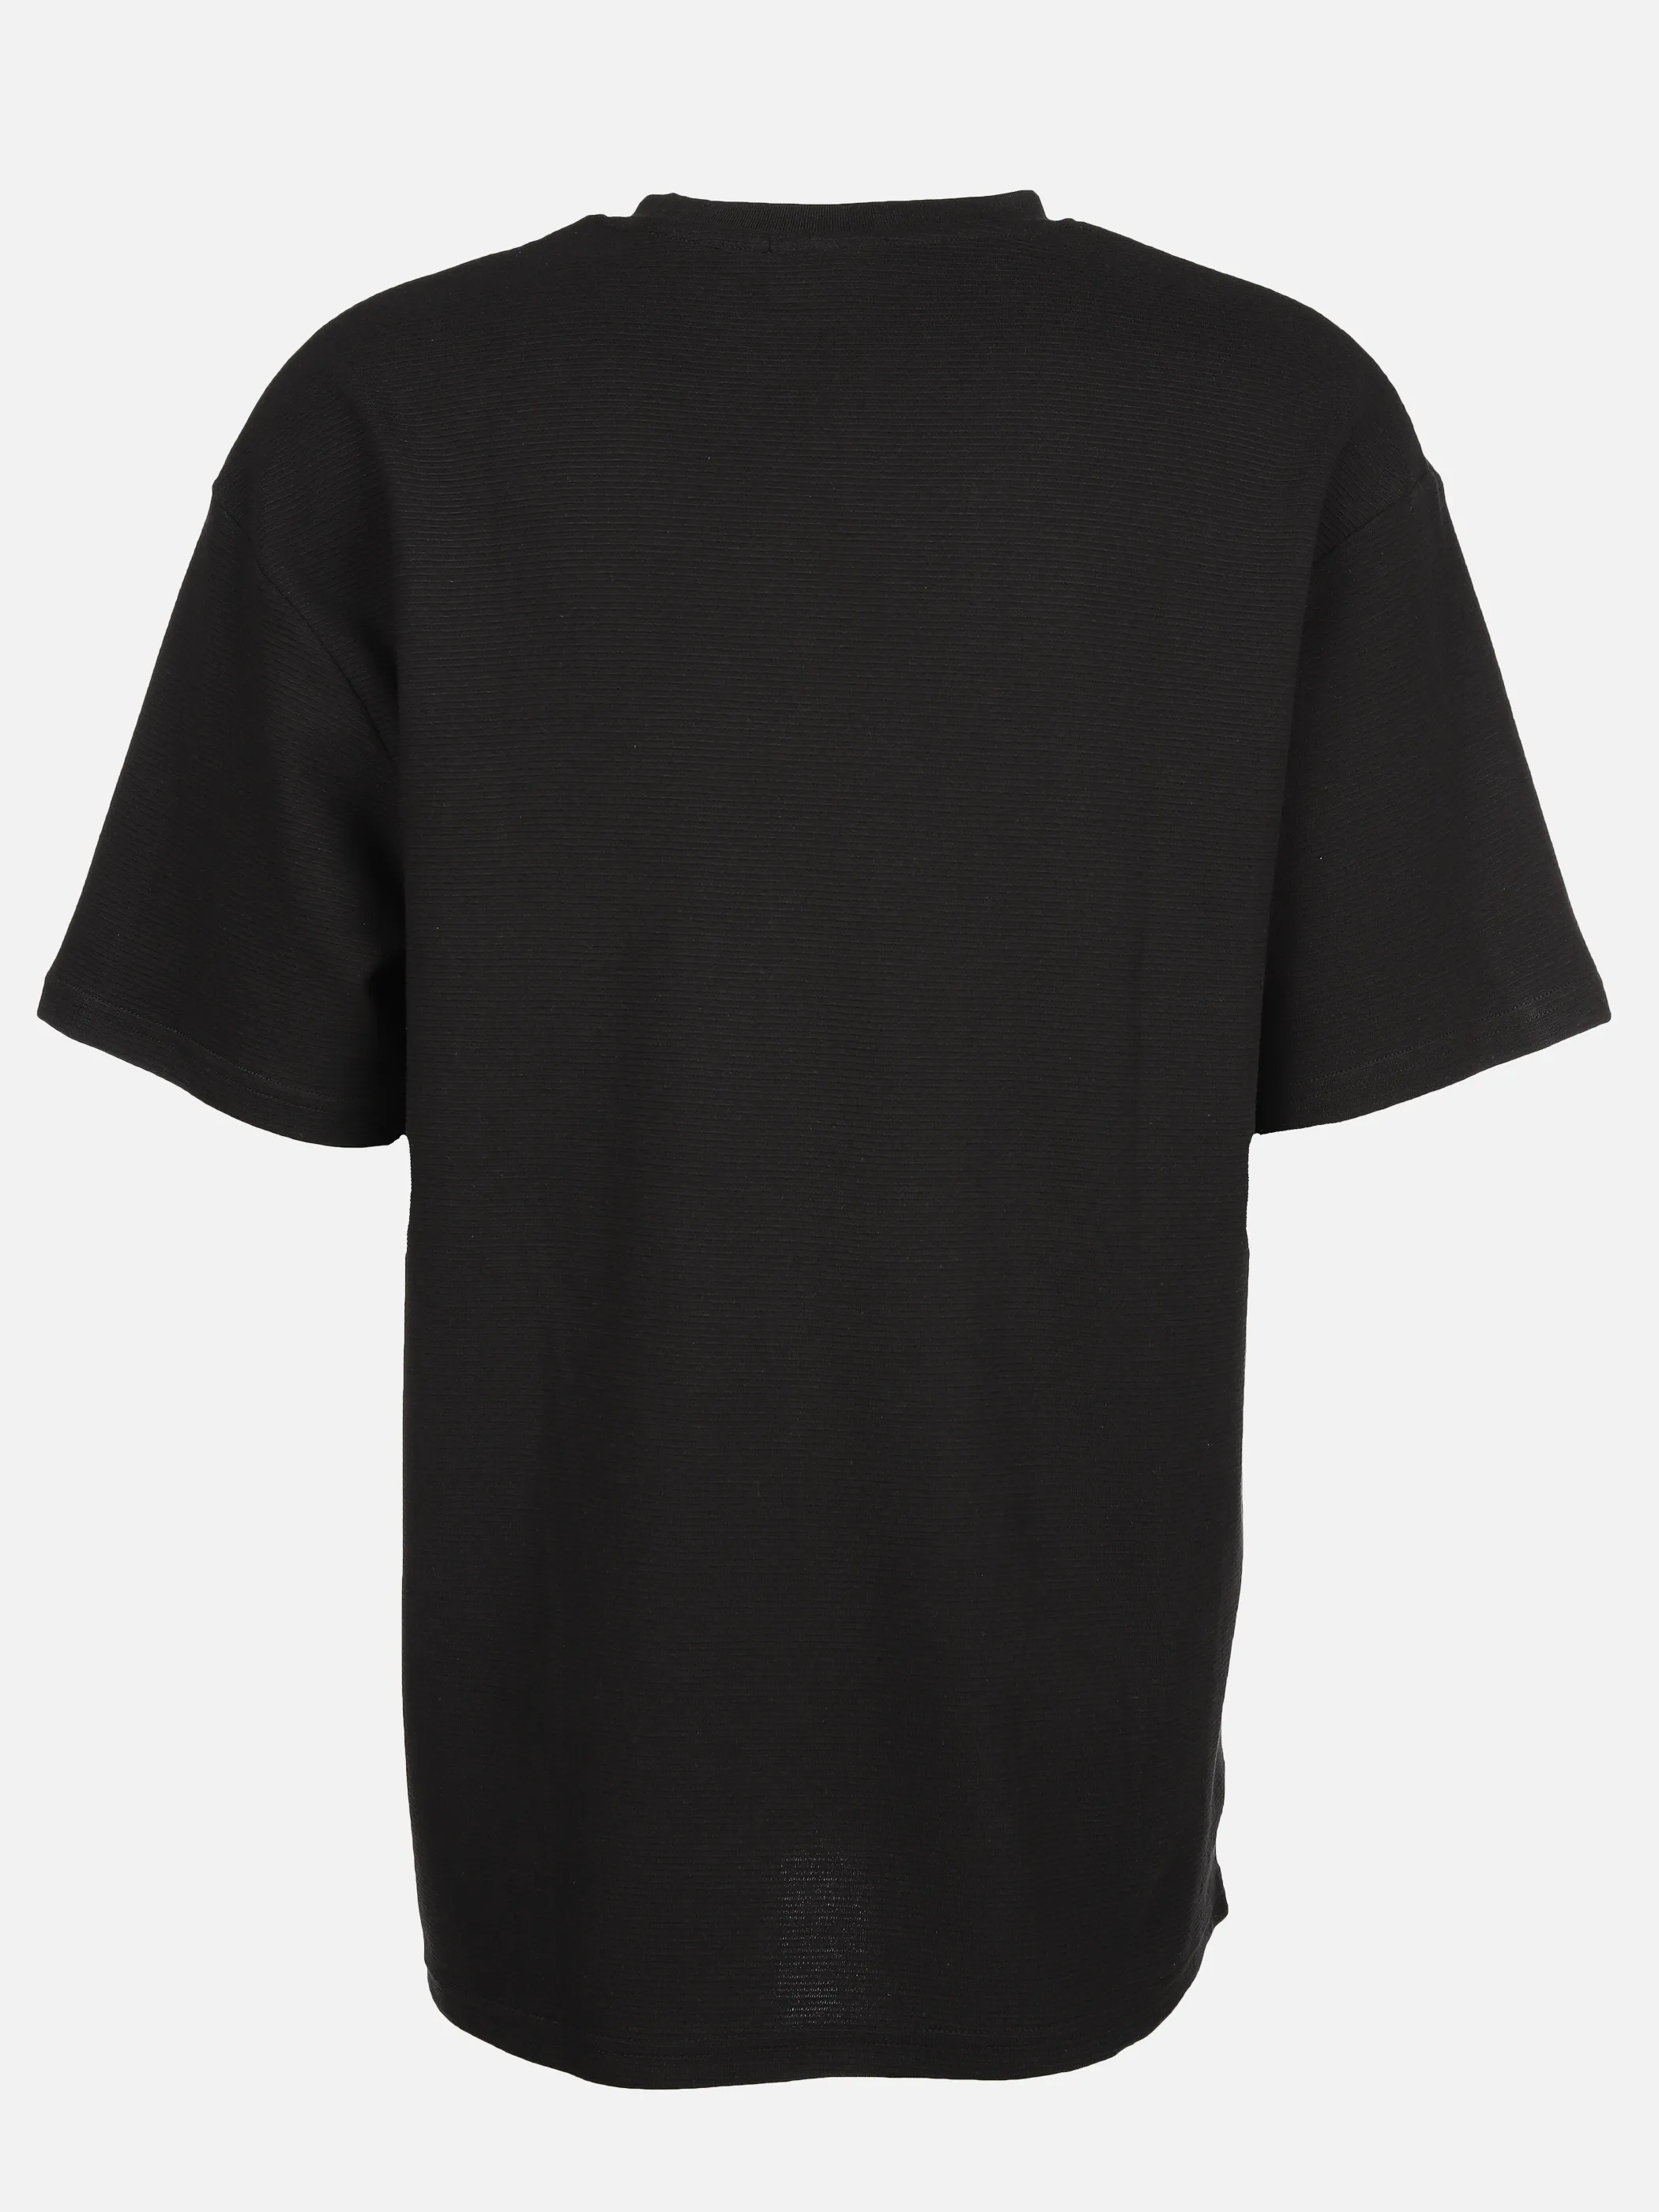 IX-O YF-He- T-Shirt Relaxed Fit Schwarz 891819 BLACK 2